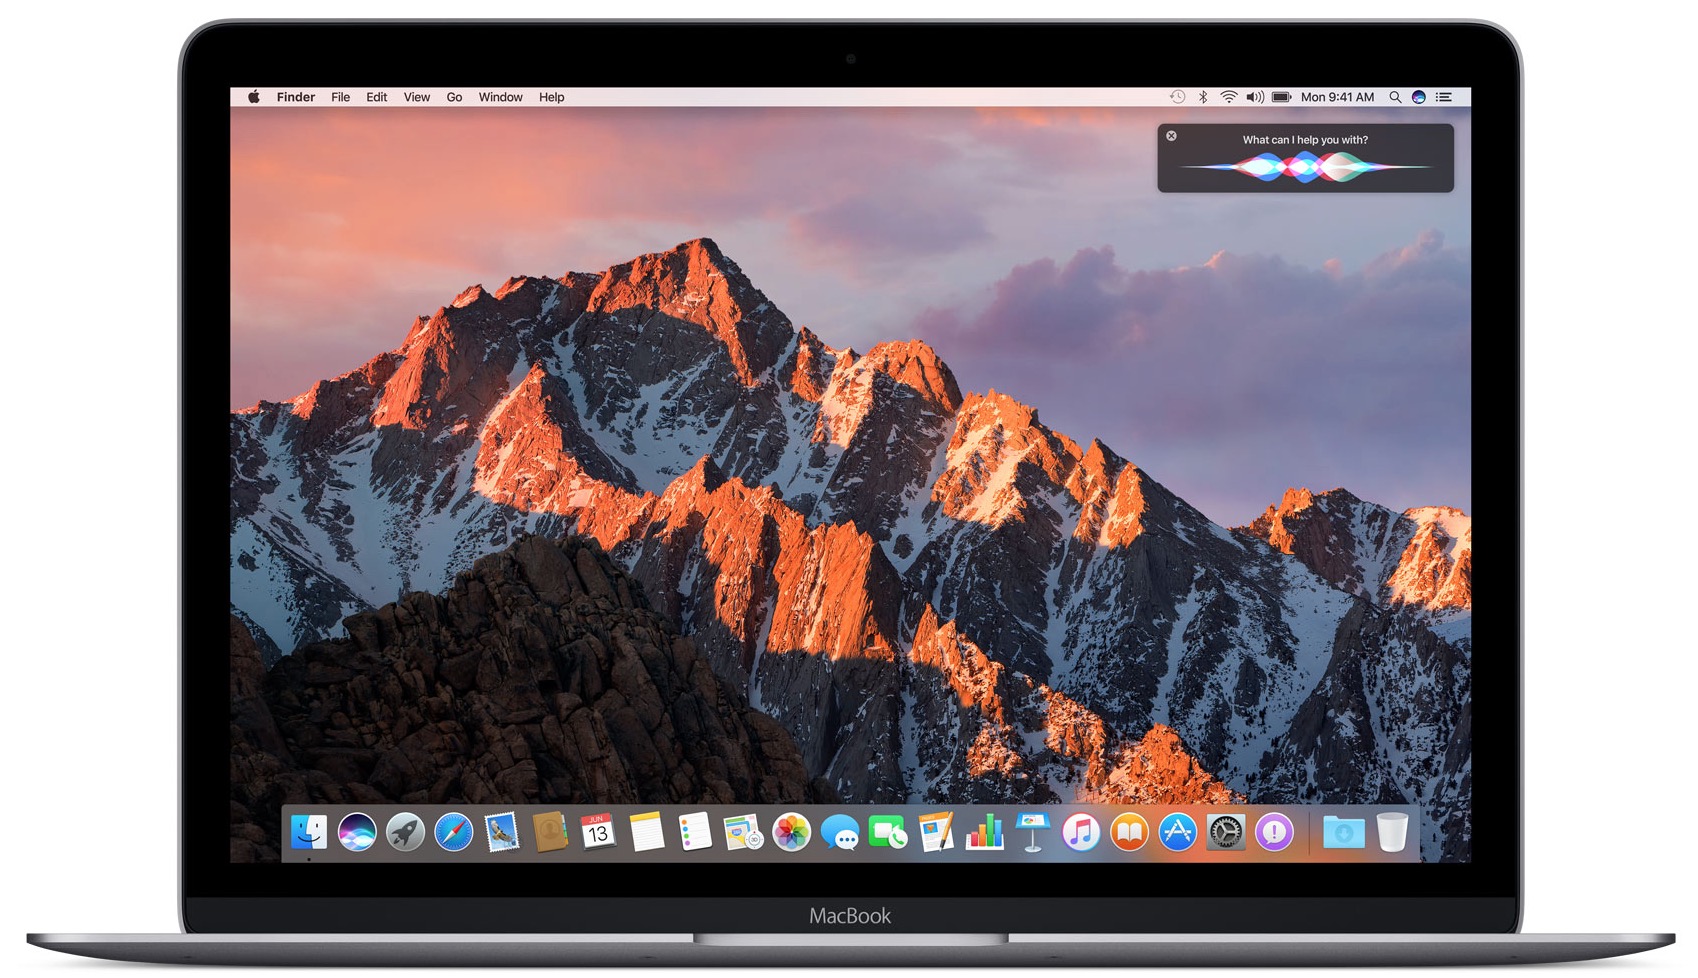 Mac Os Sierra Download 10.12